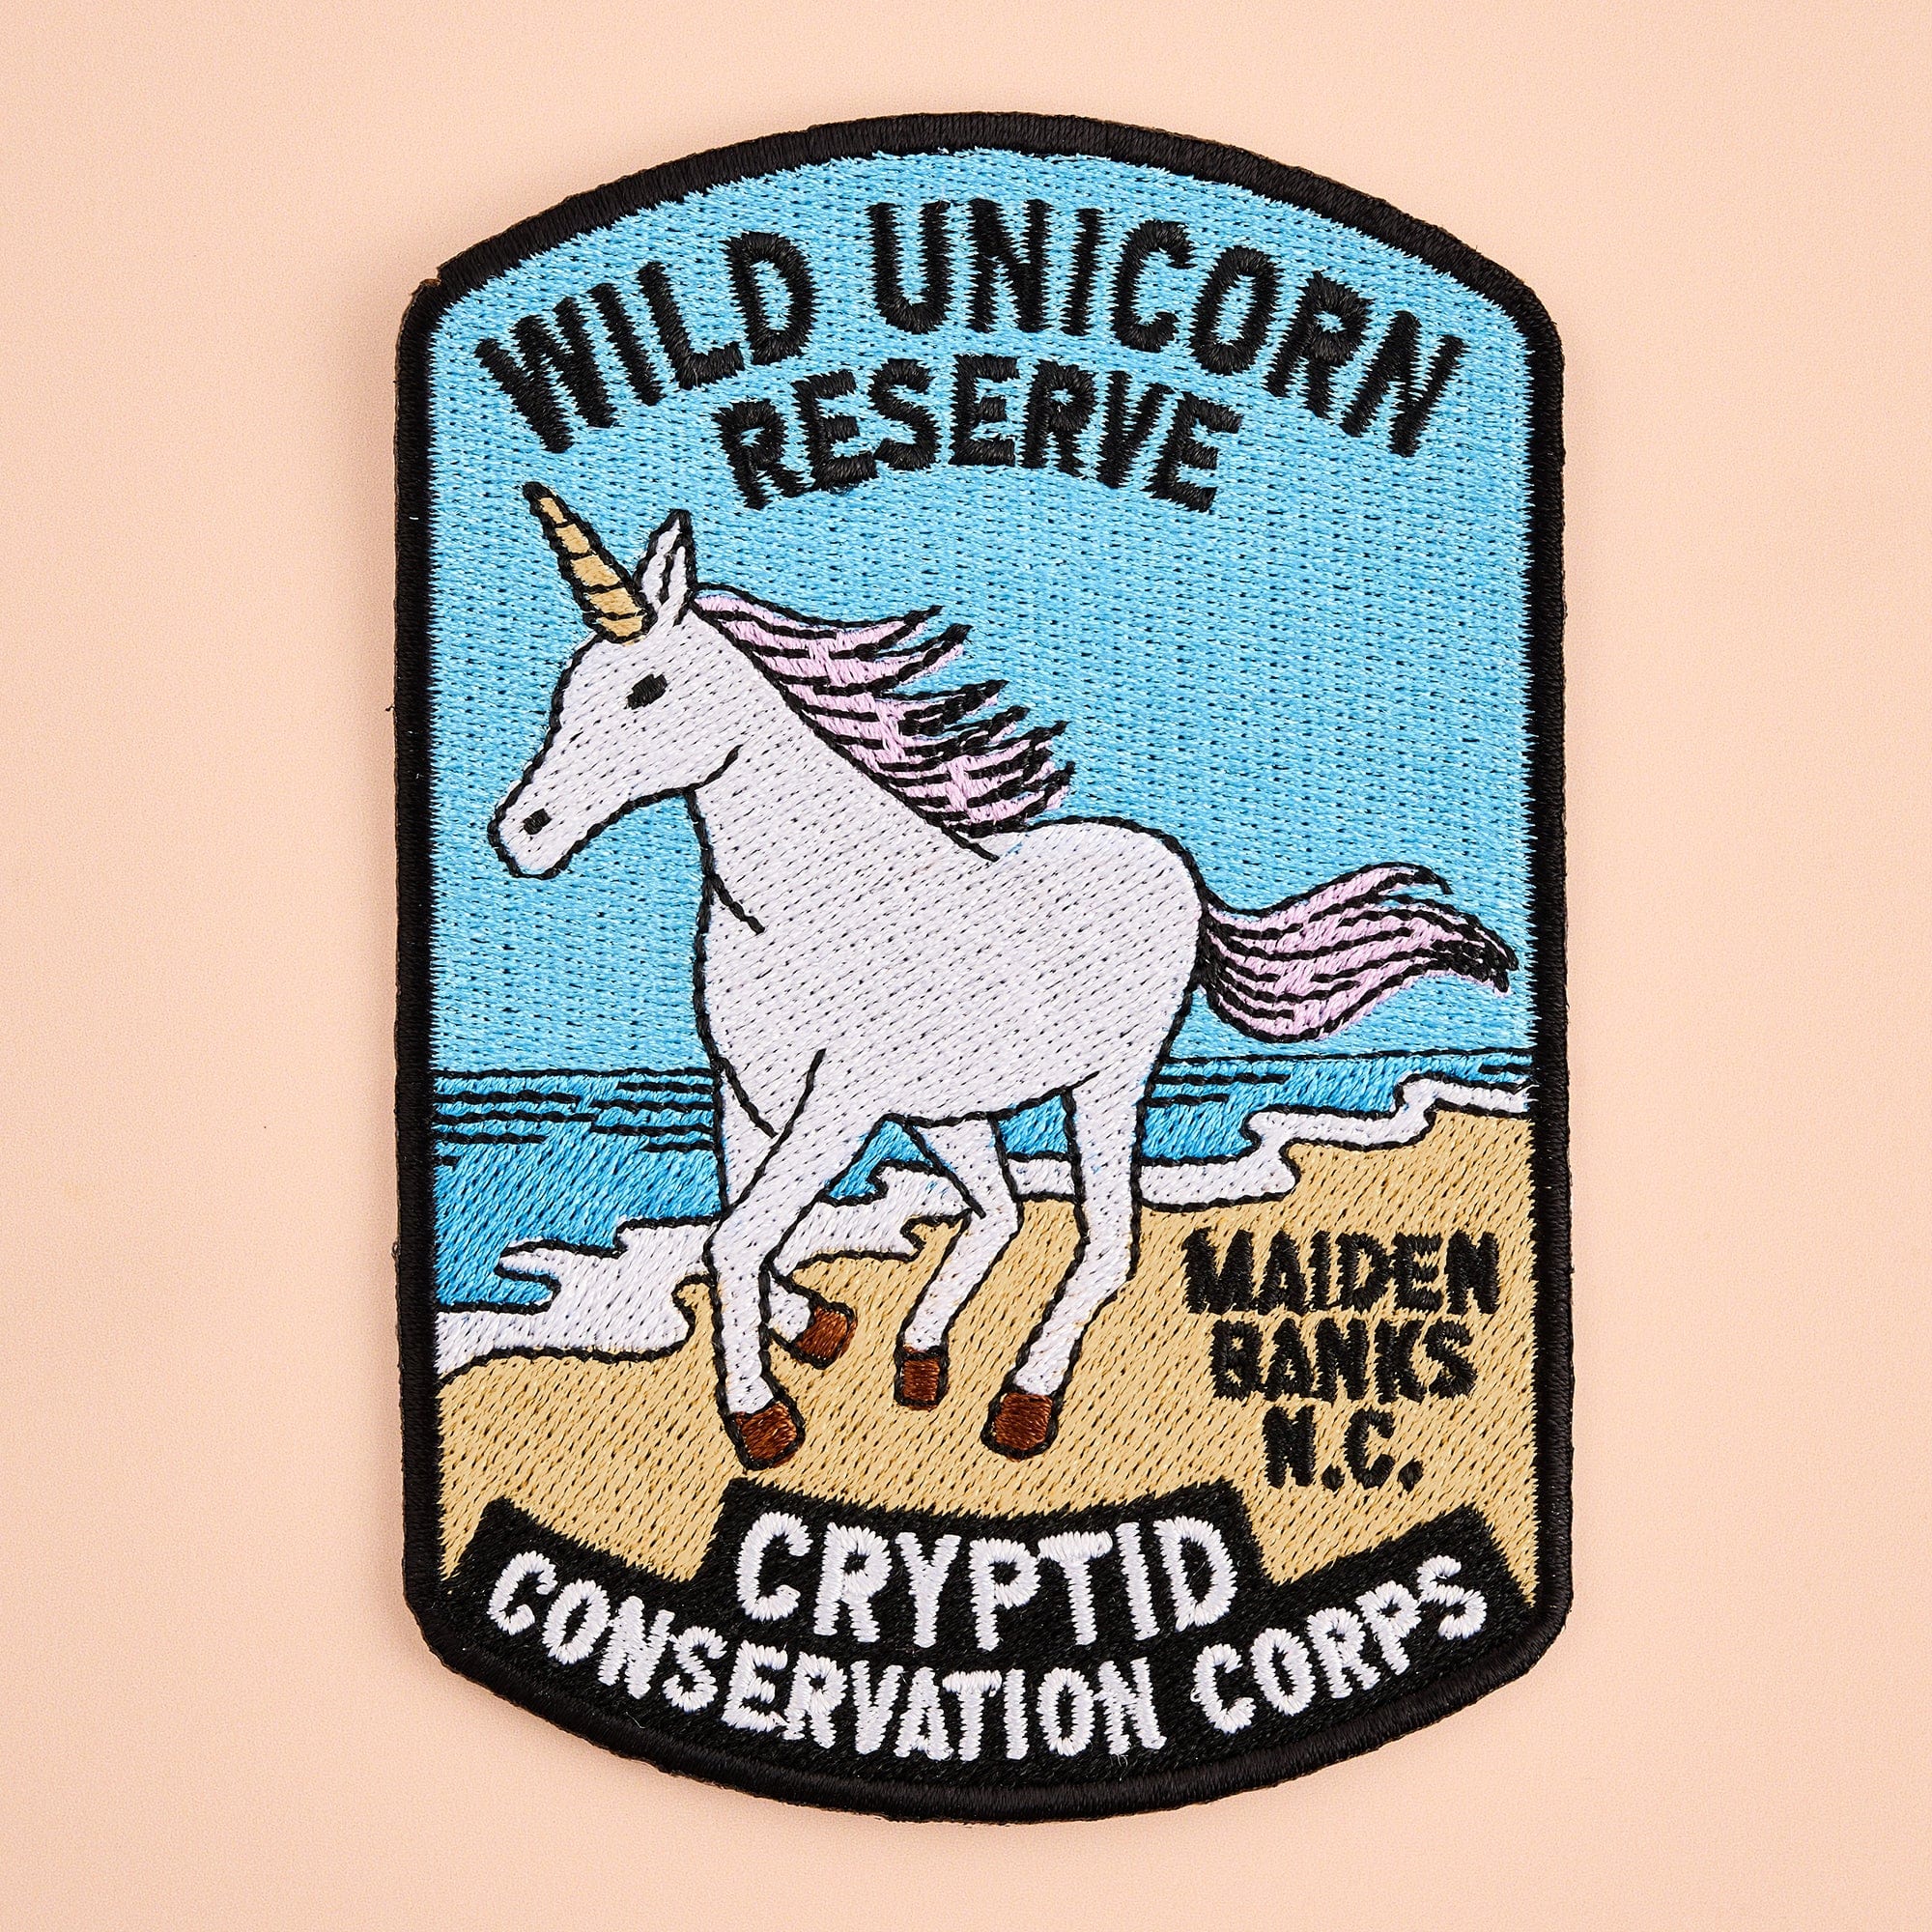 Wild Unicorn Reserve Set: Pin, Sticker, and Patch